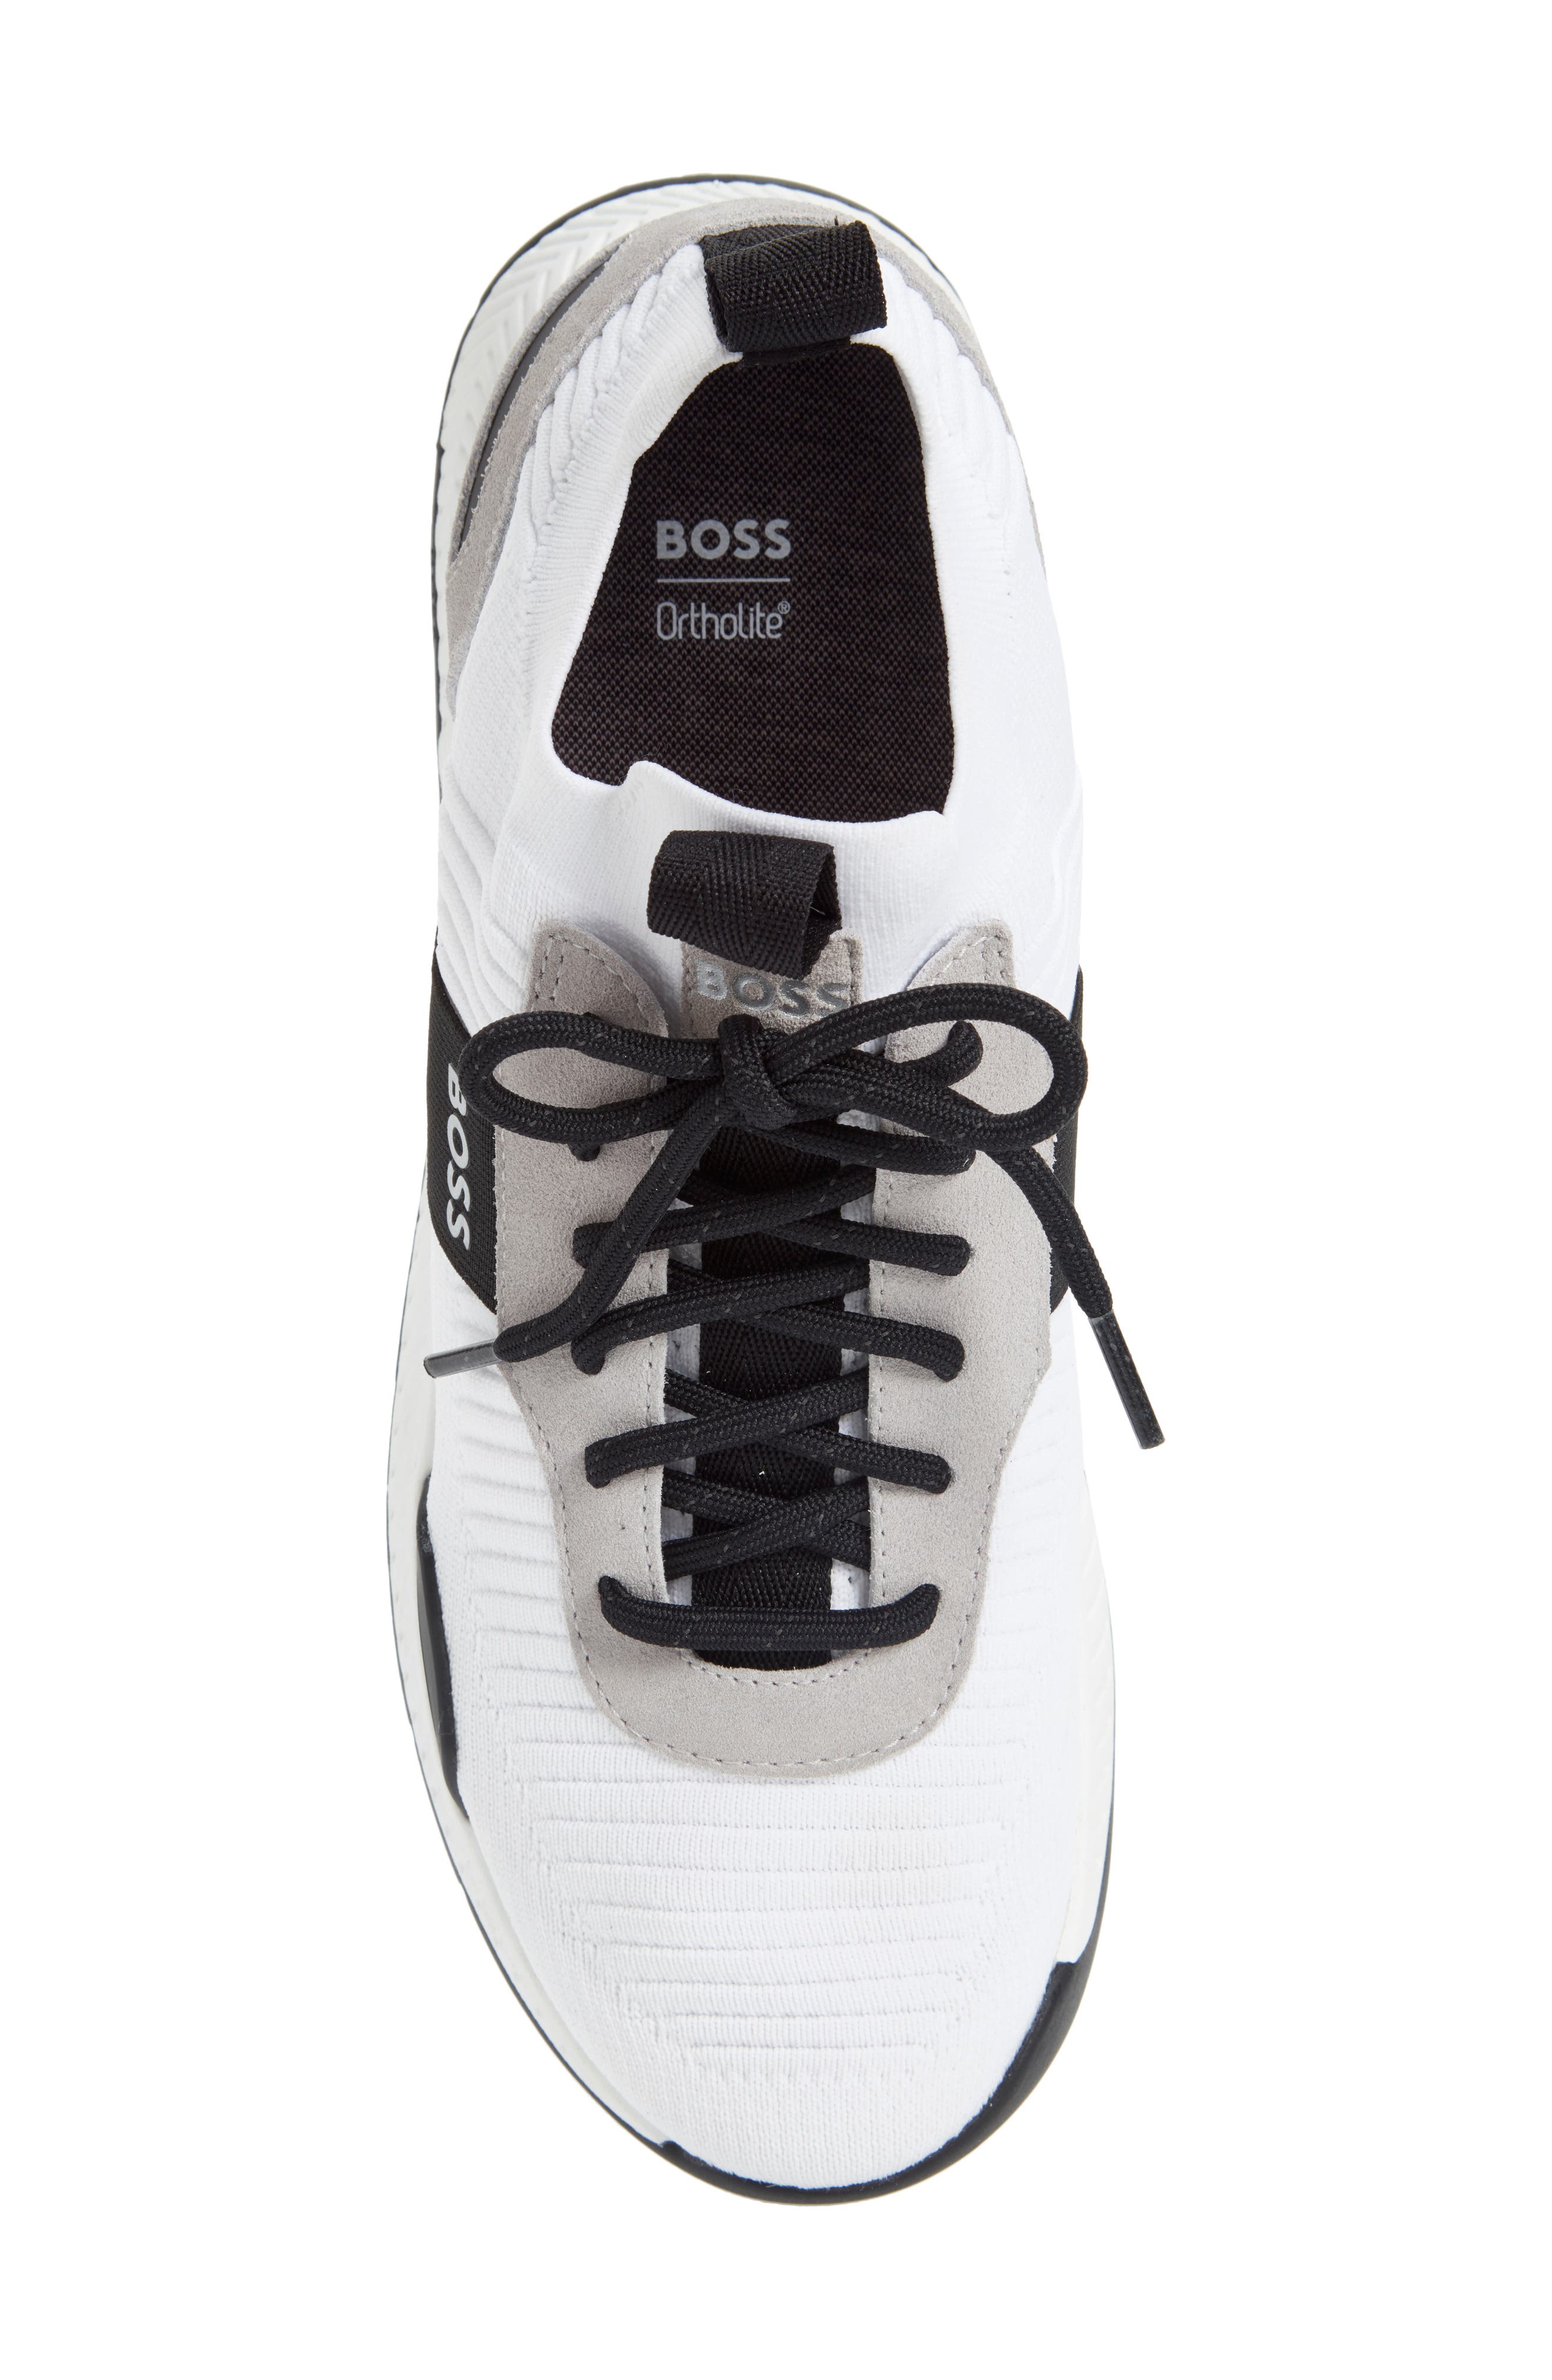 KIDS FASHION Footwear Sports discount 57% Yellow/White/Black/Navy Blue 25                  EU Hugo Boss trainers 